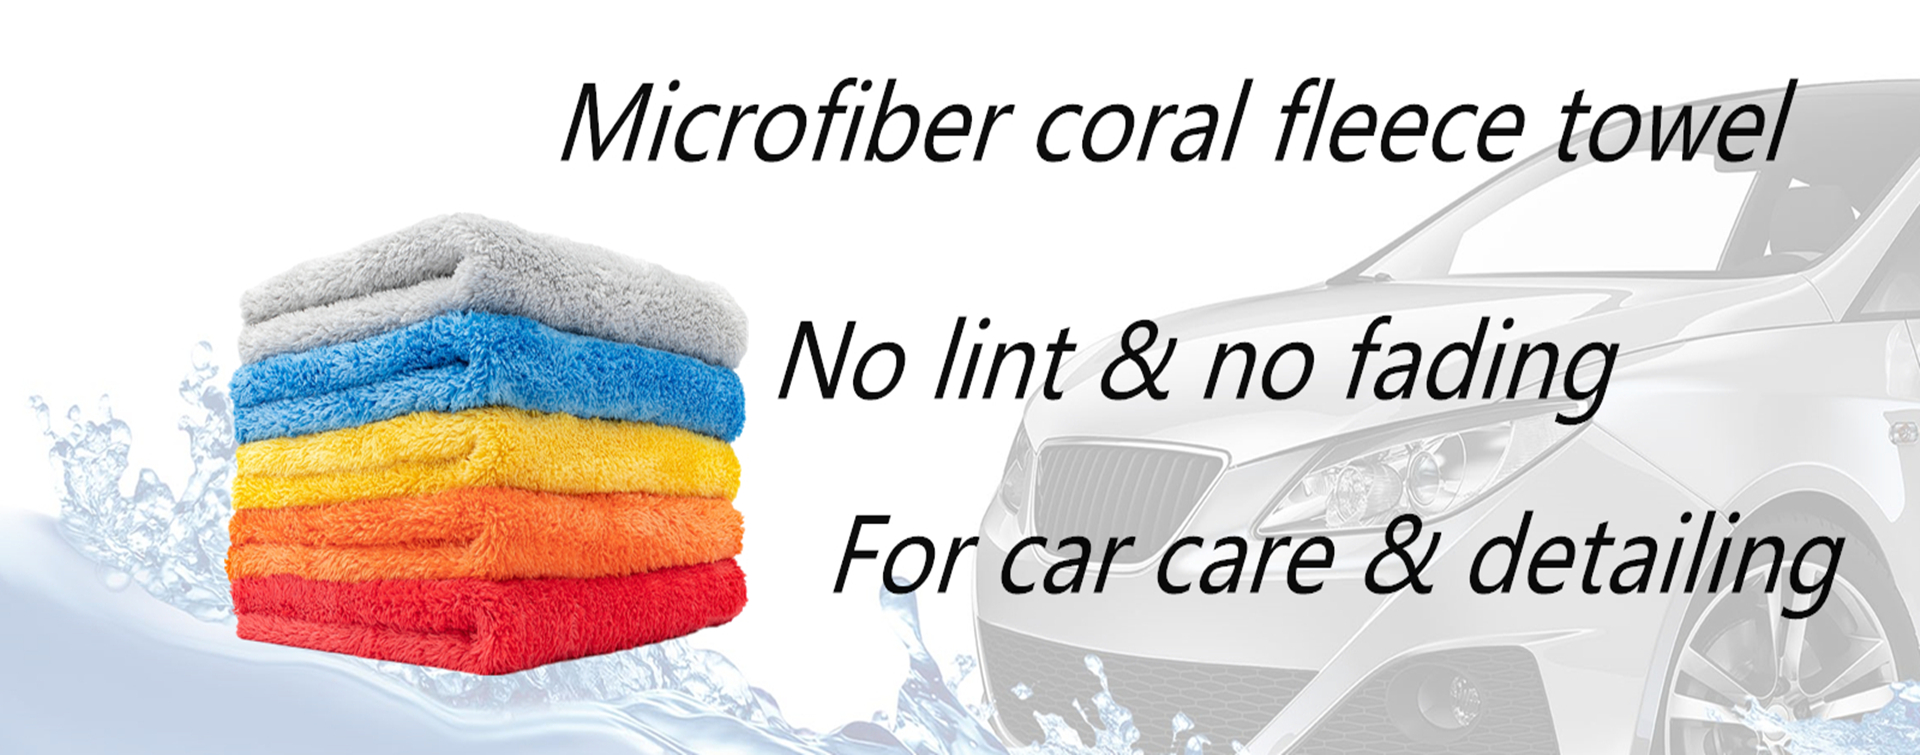 https://www.jxmicrofibertowel.com/670gsm-edgeless-plush-microfiber-coral-fleece-towel.html